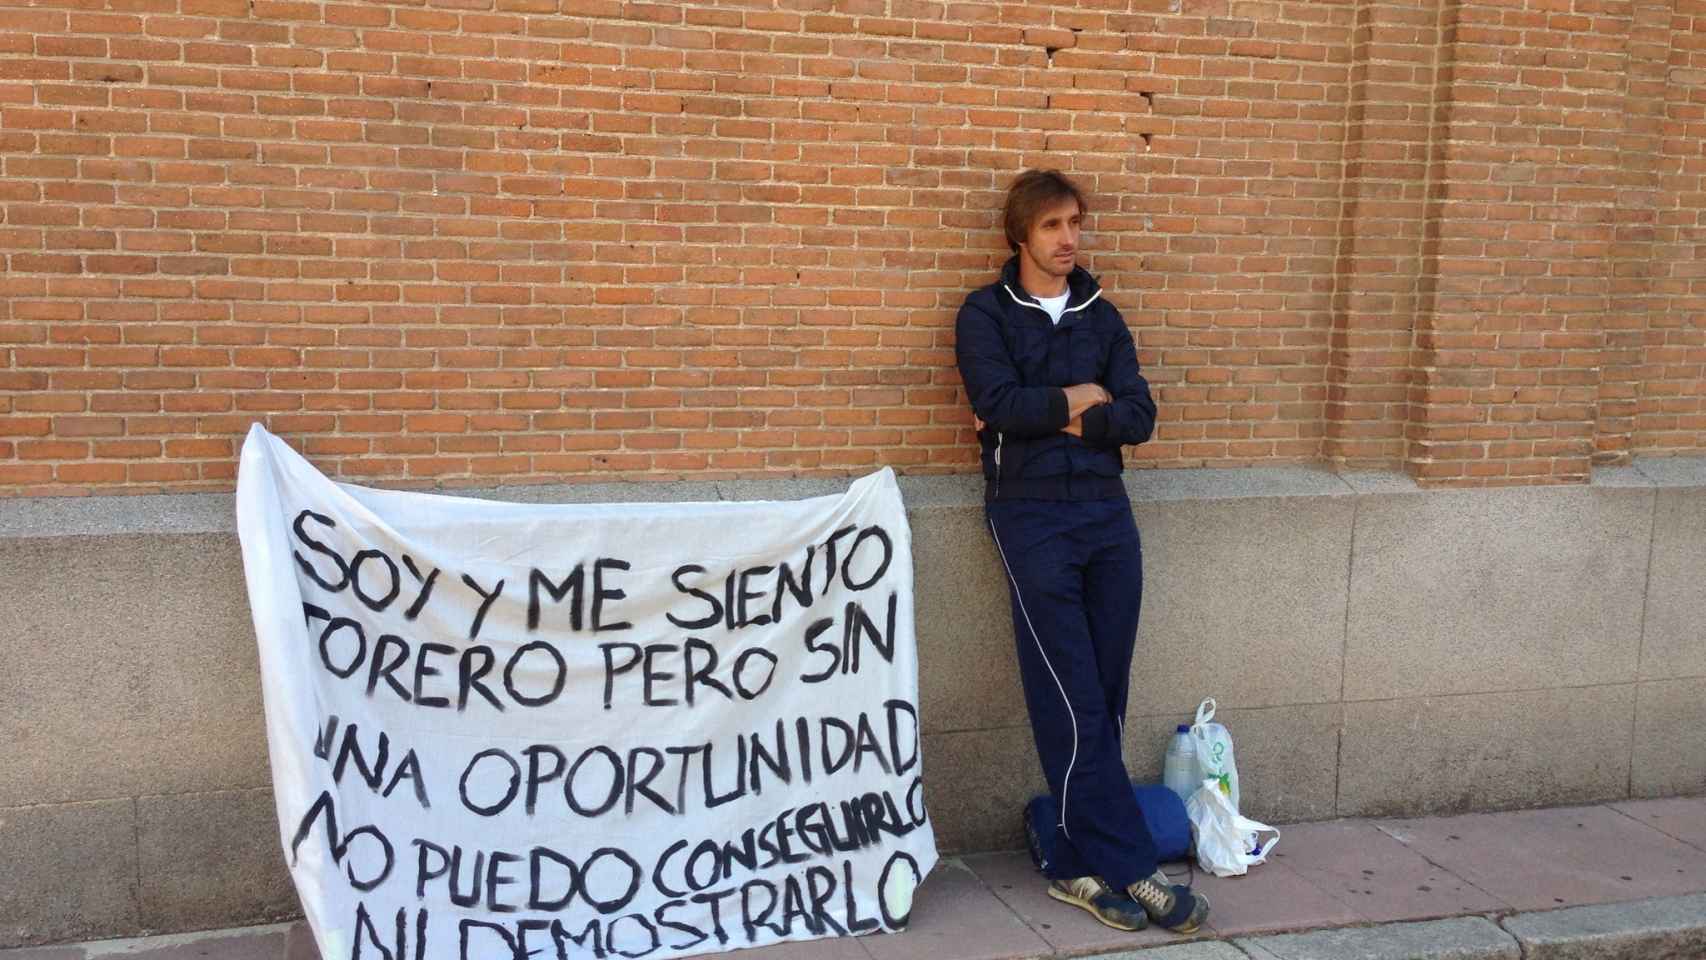 Huelga de hambre de Javier Velázquez